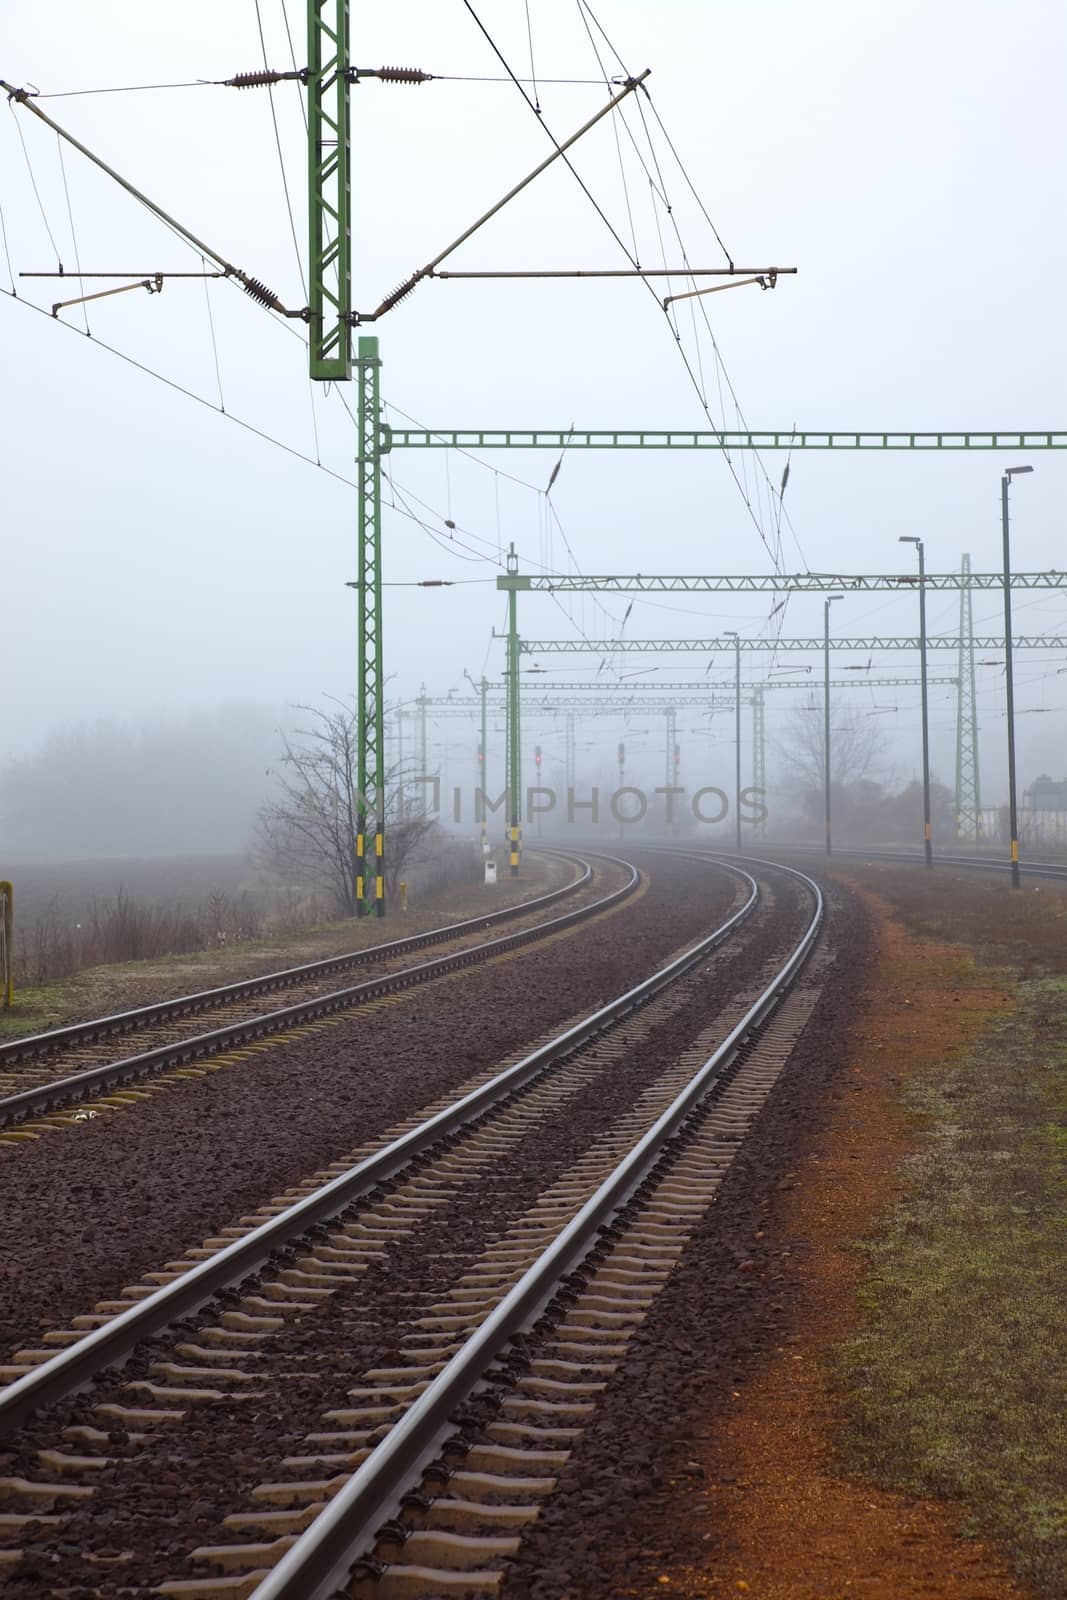 Railroad tracks in the fog